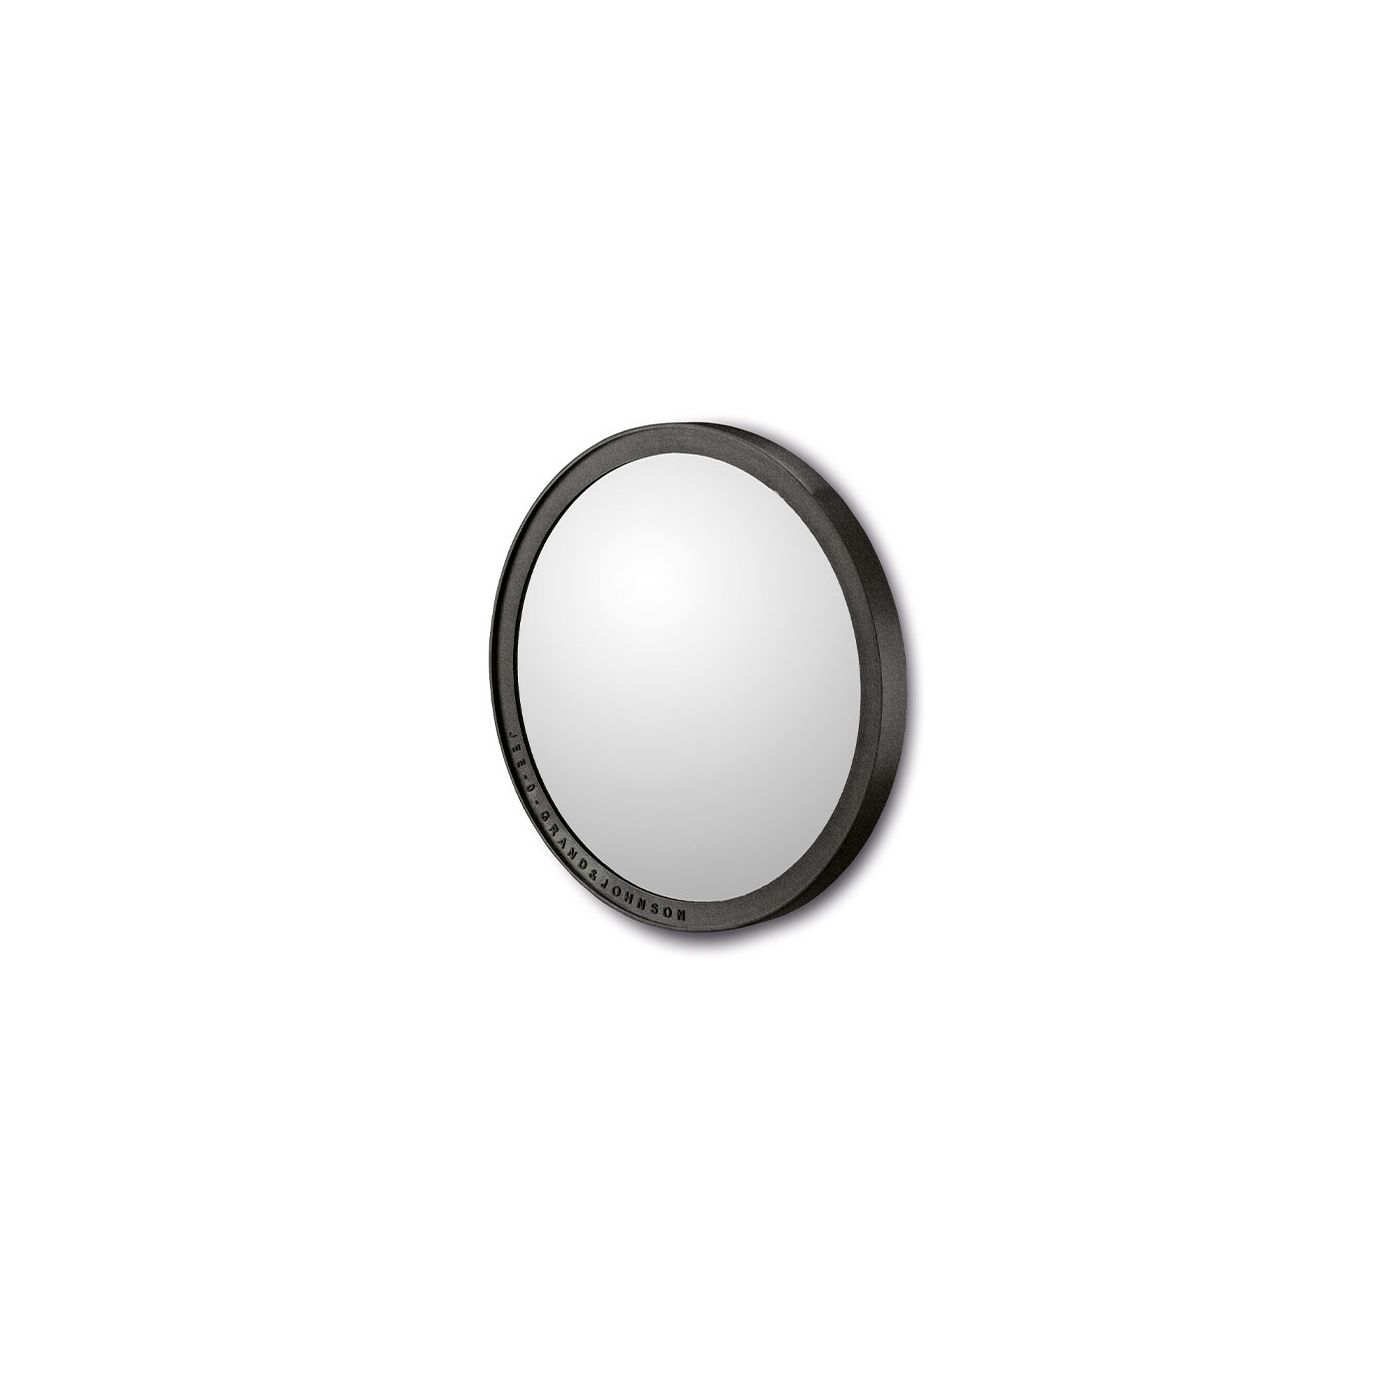 JEE-O Soho ronde spiegel 50 hammercoat zwart mat